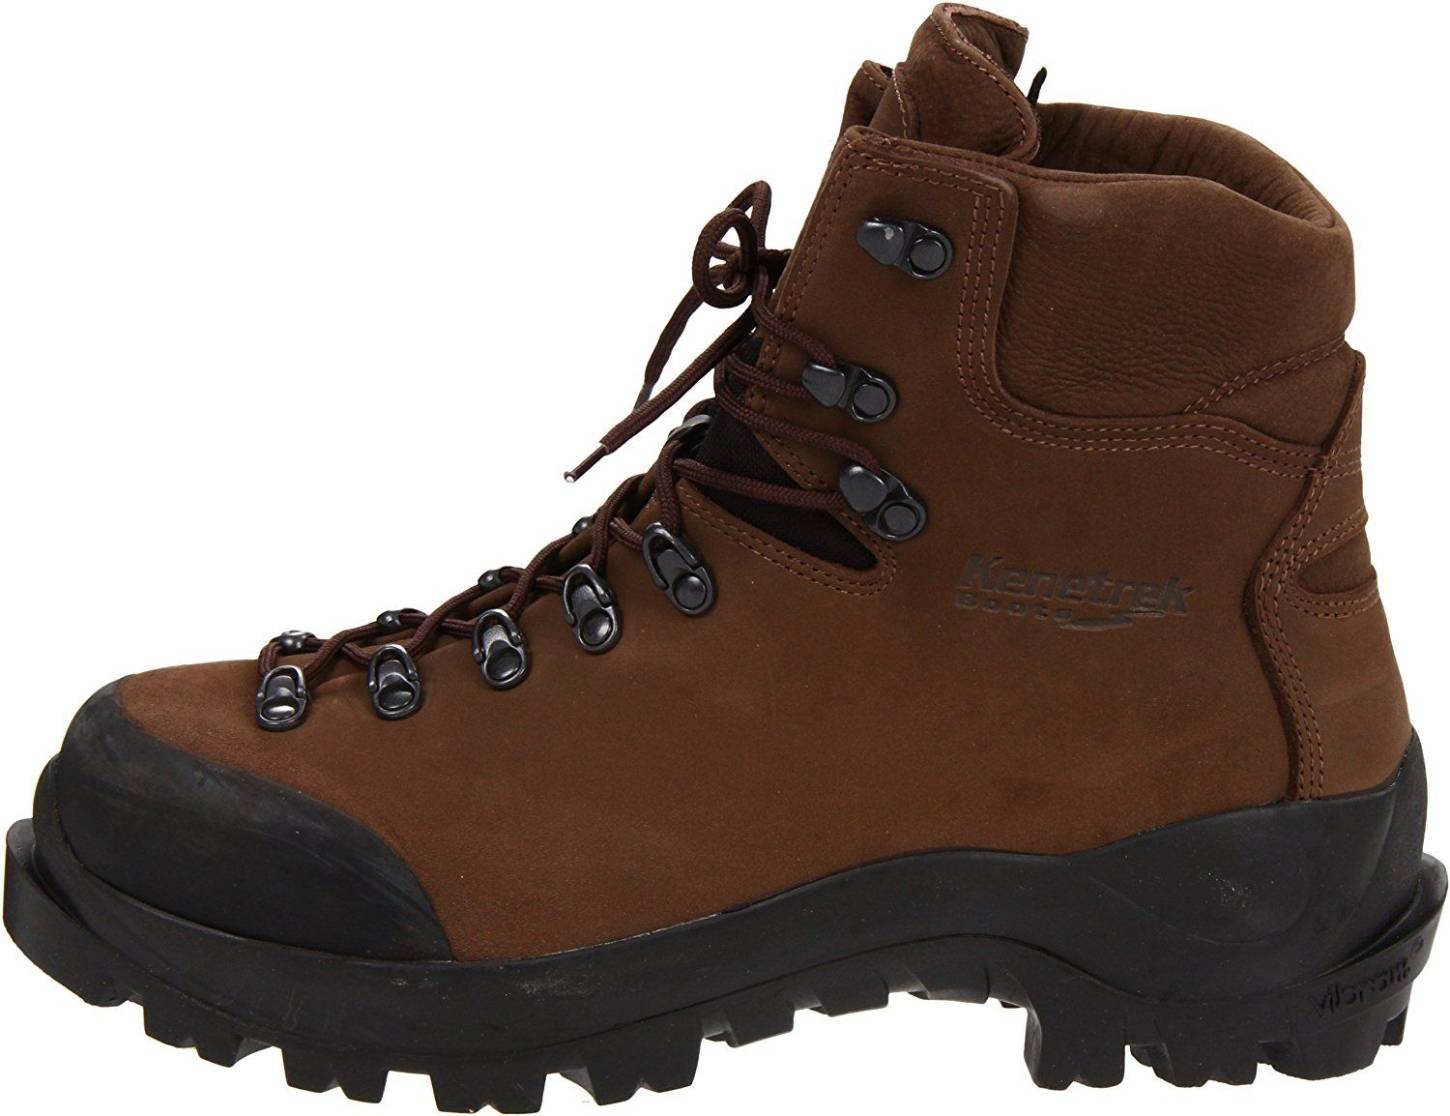 5 Kenetrek hiking boots: Save up to 20% | RunRepeat